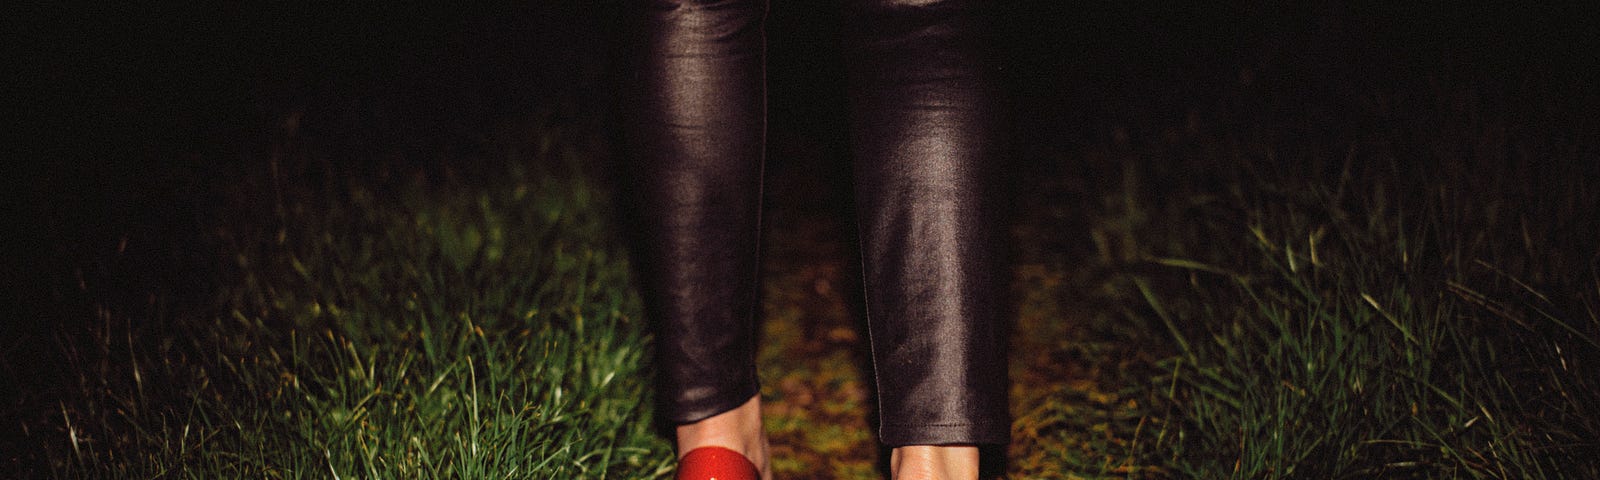 Red heels on a dark path